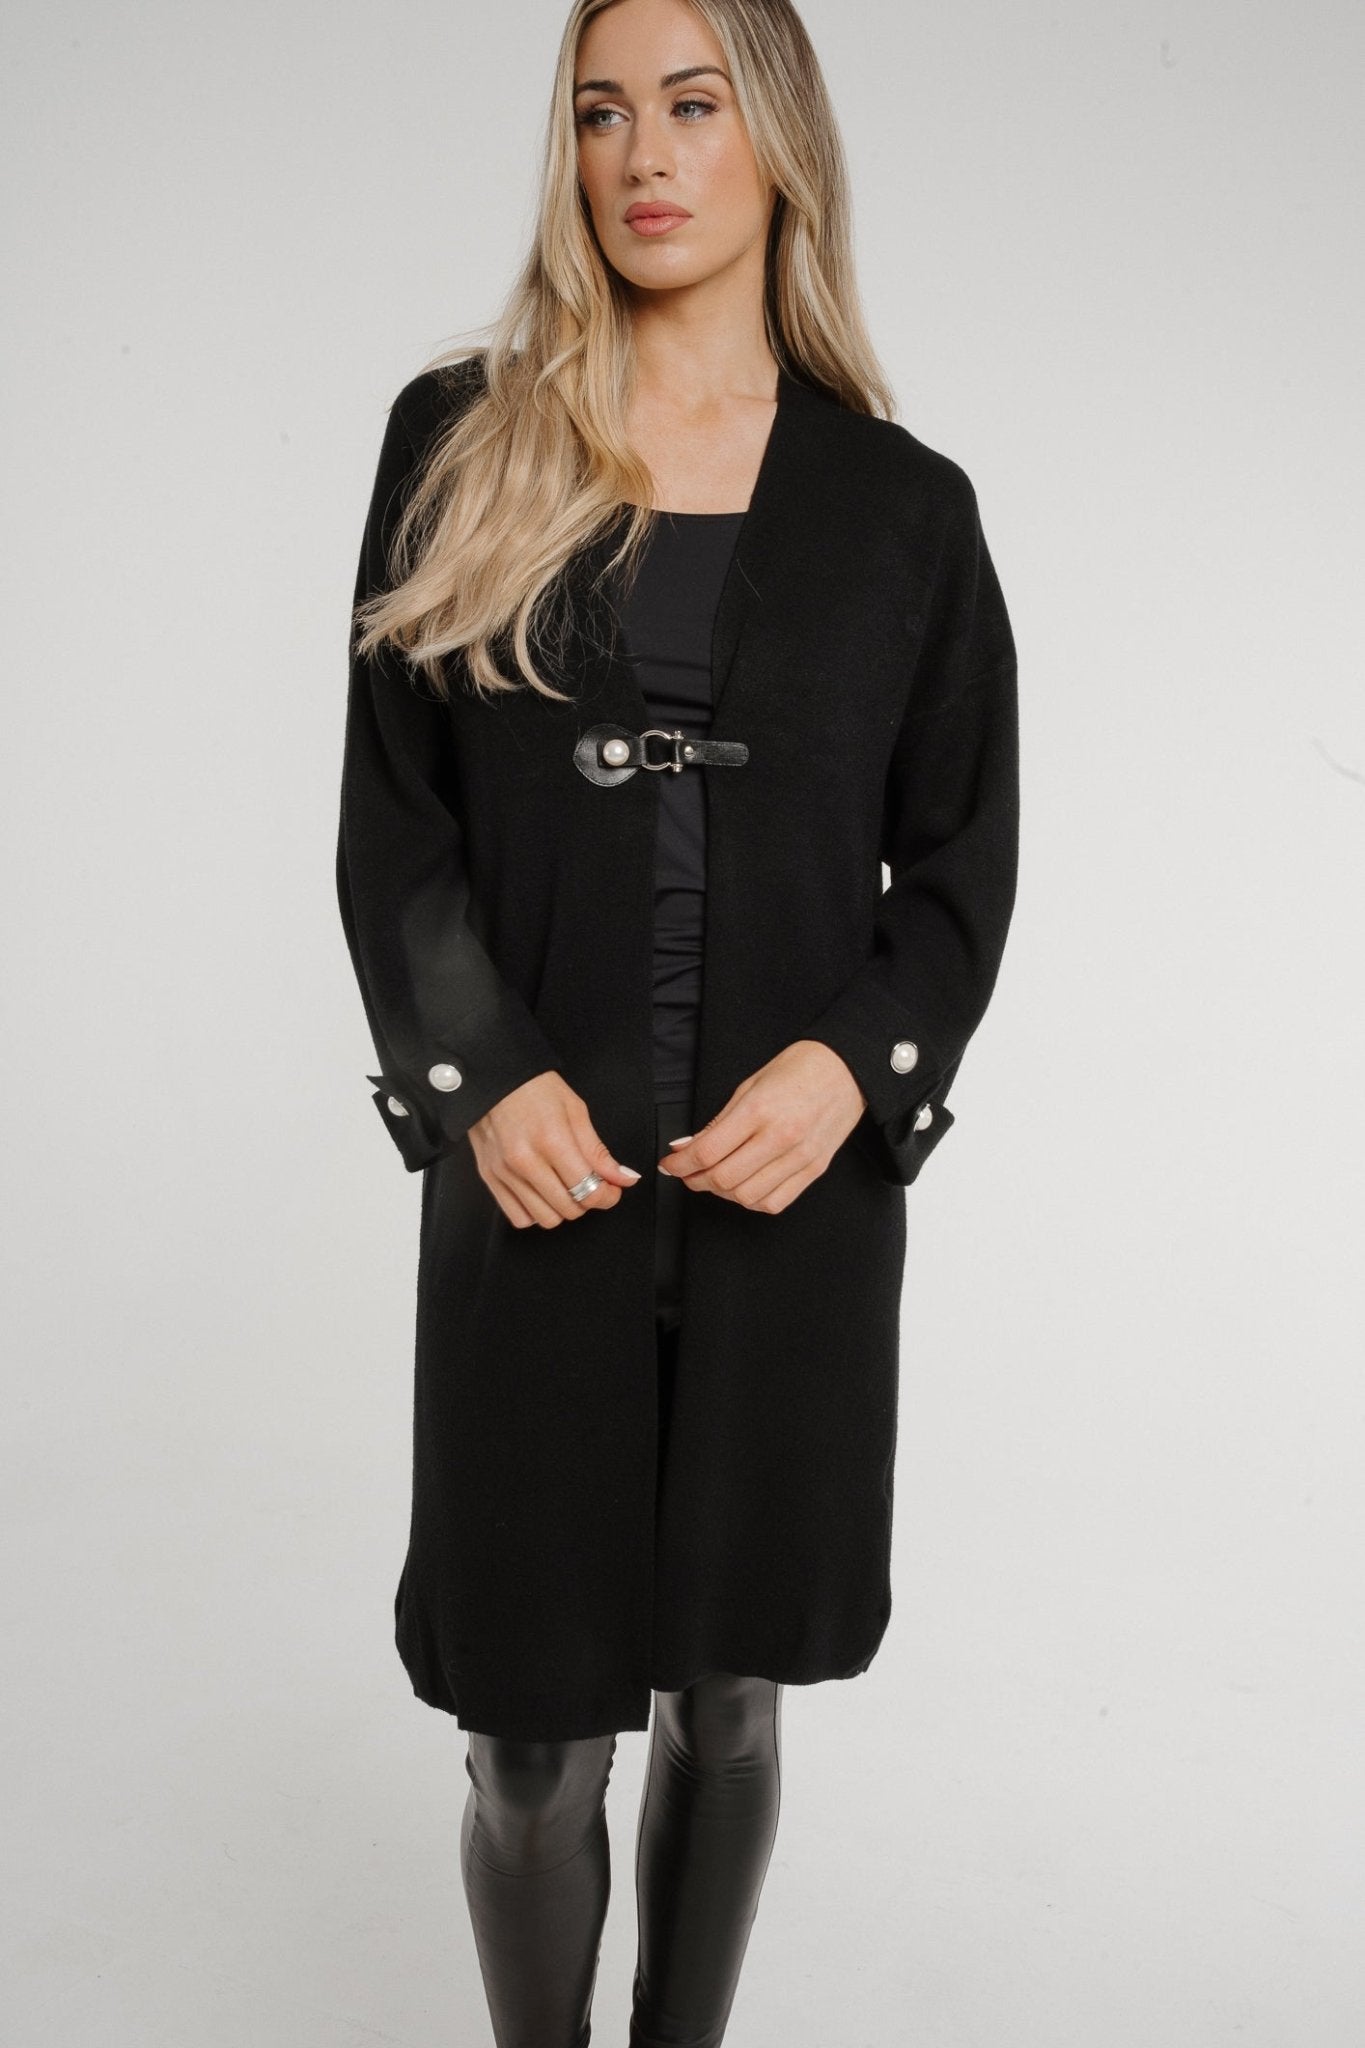 Maddie Pearl Clasp Cardigan In Black - The Walk in Wardrobe